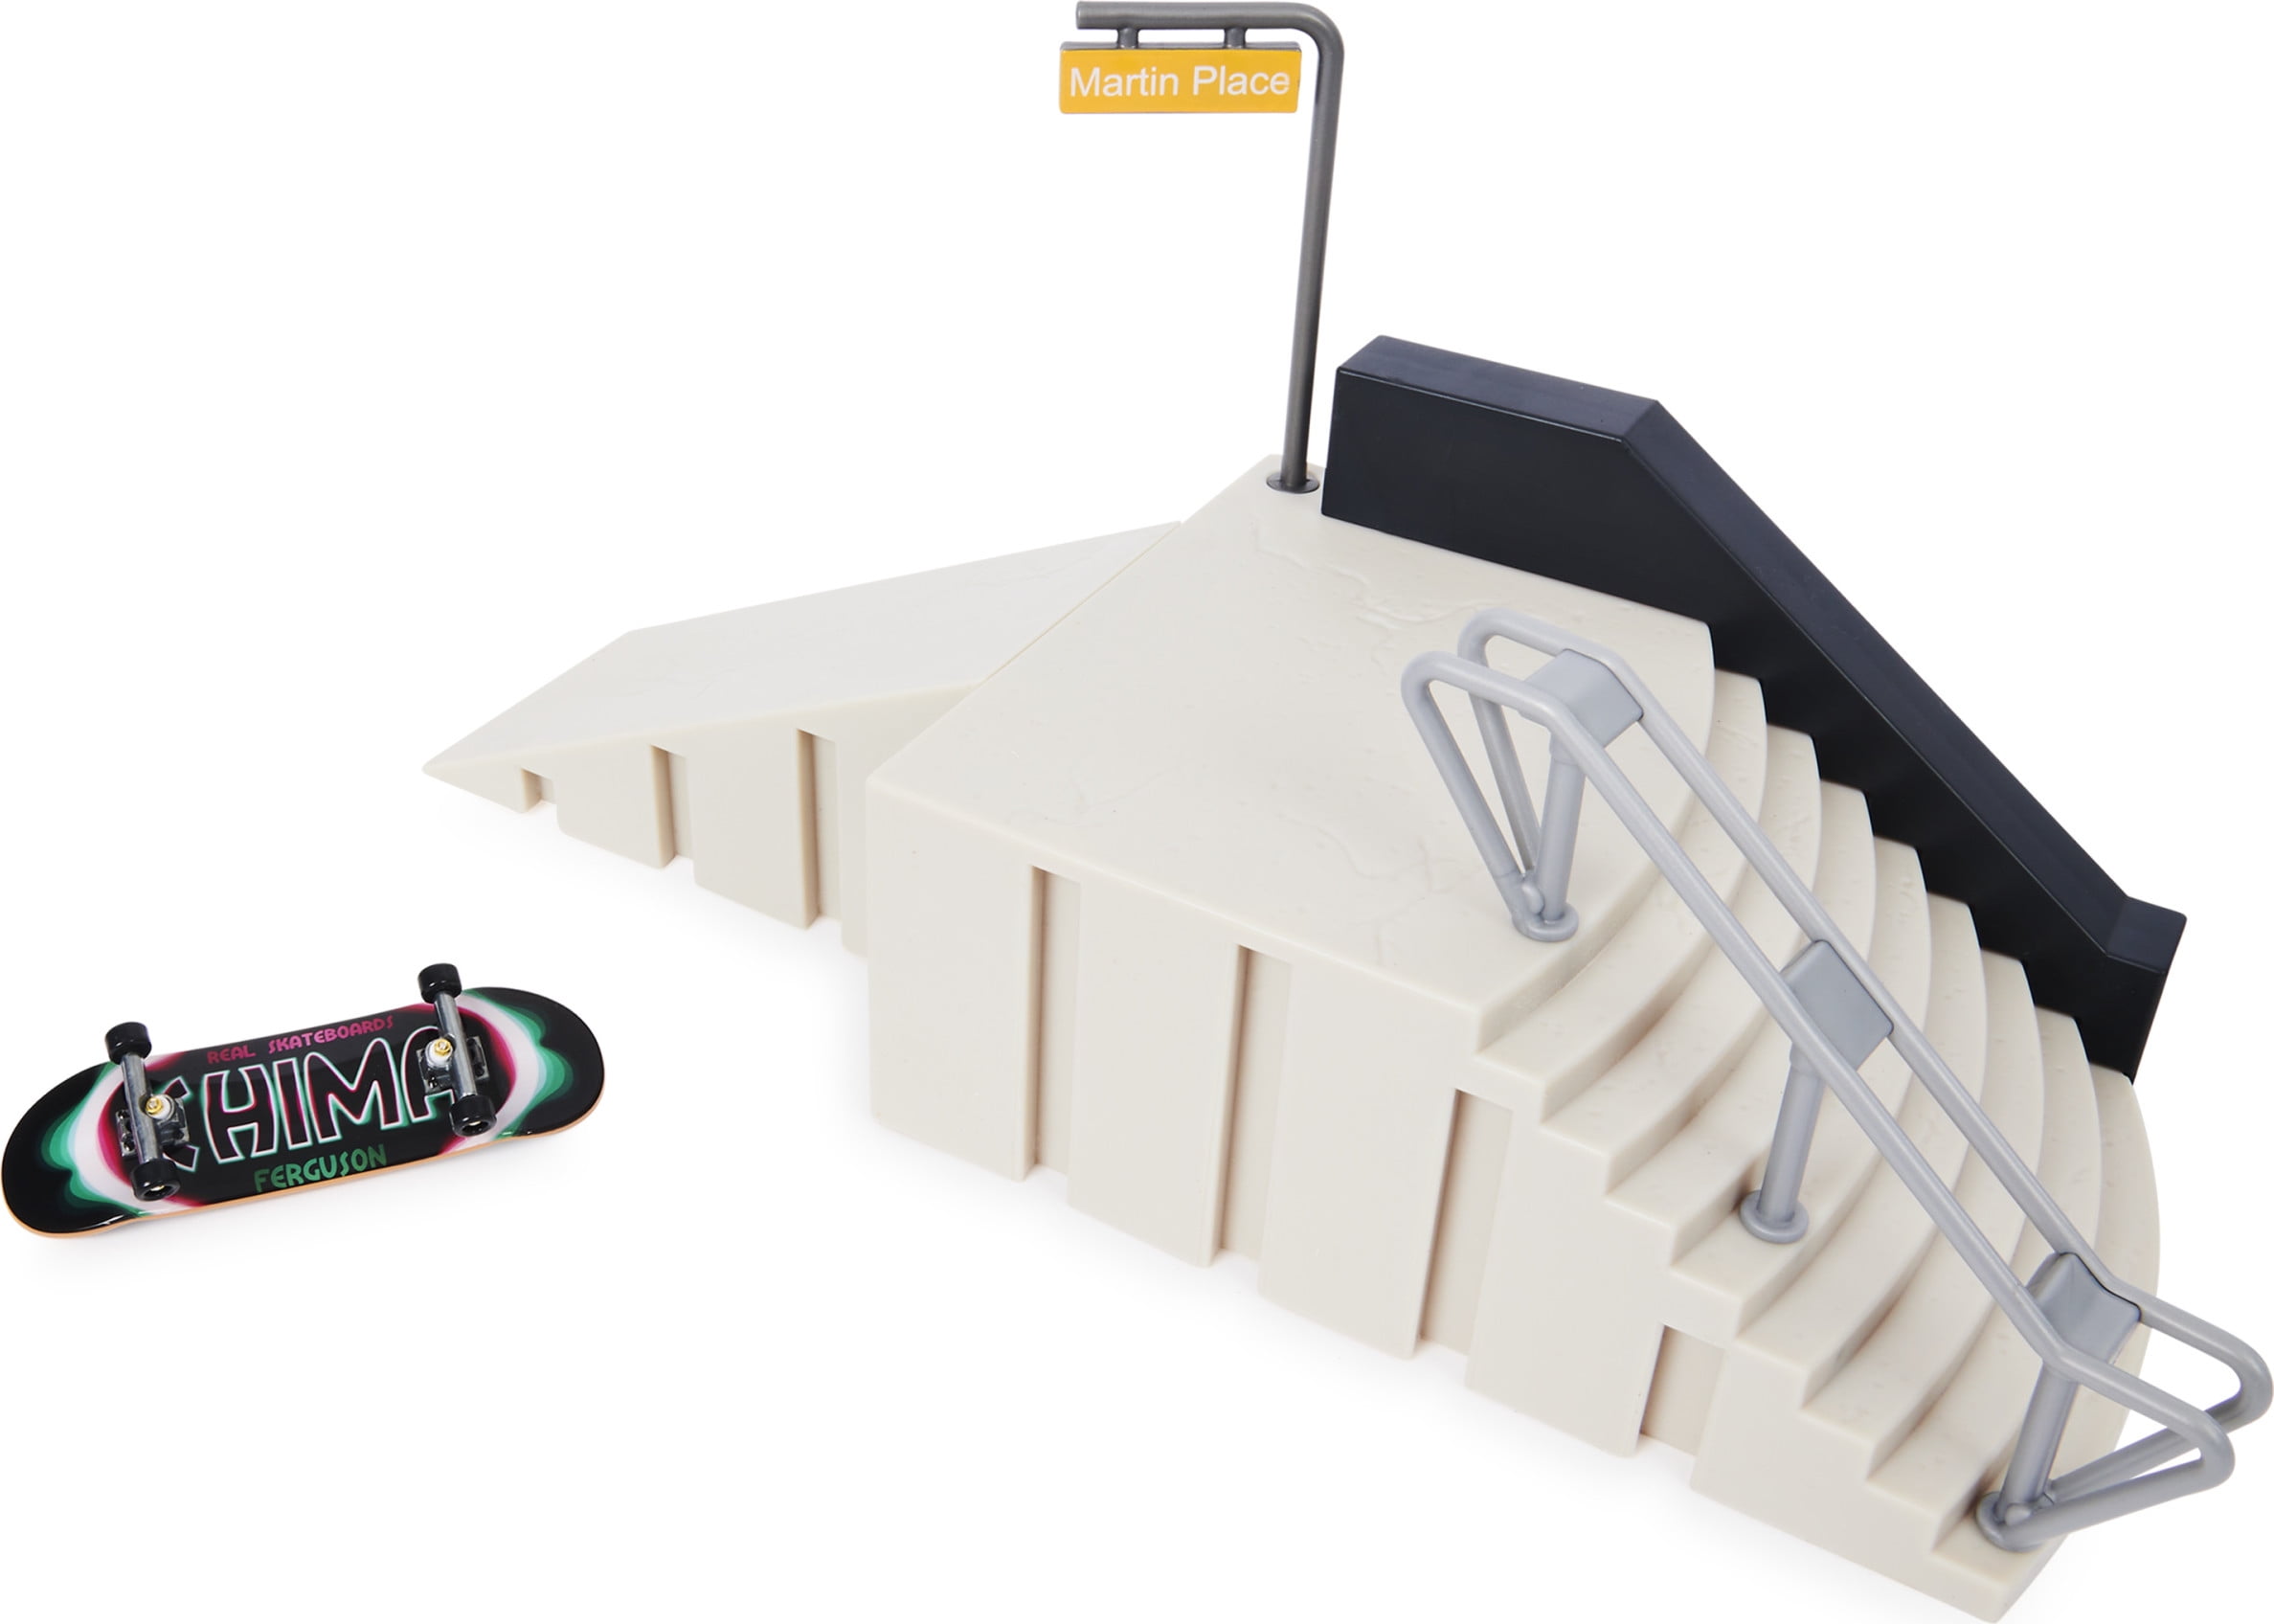 New Tech Deck REAL Skateboards Fingerboards Build a Park World Tour Martin Place 